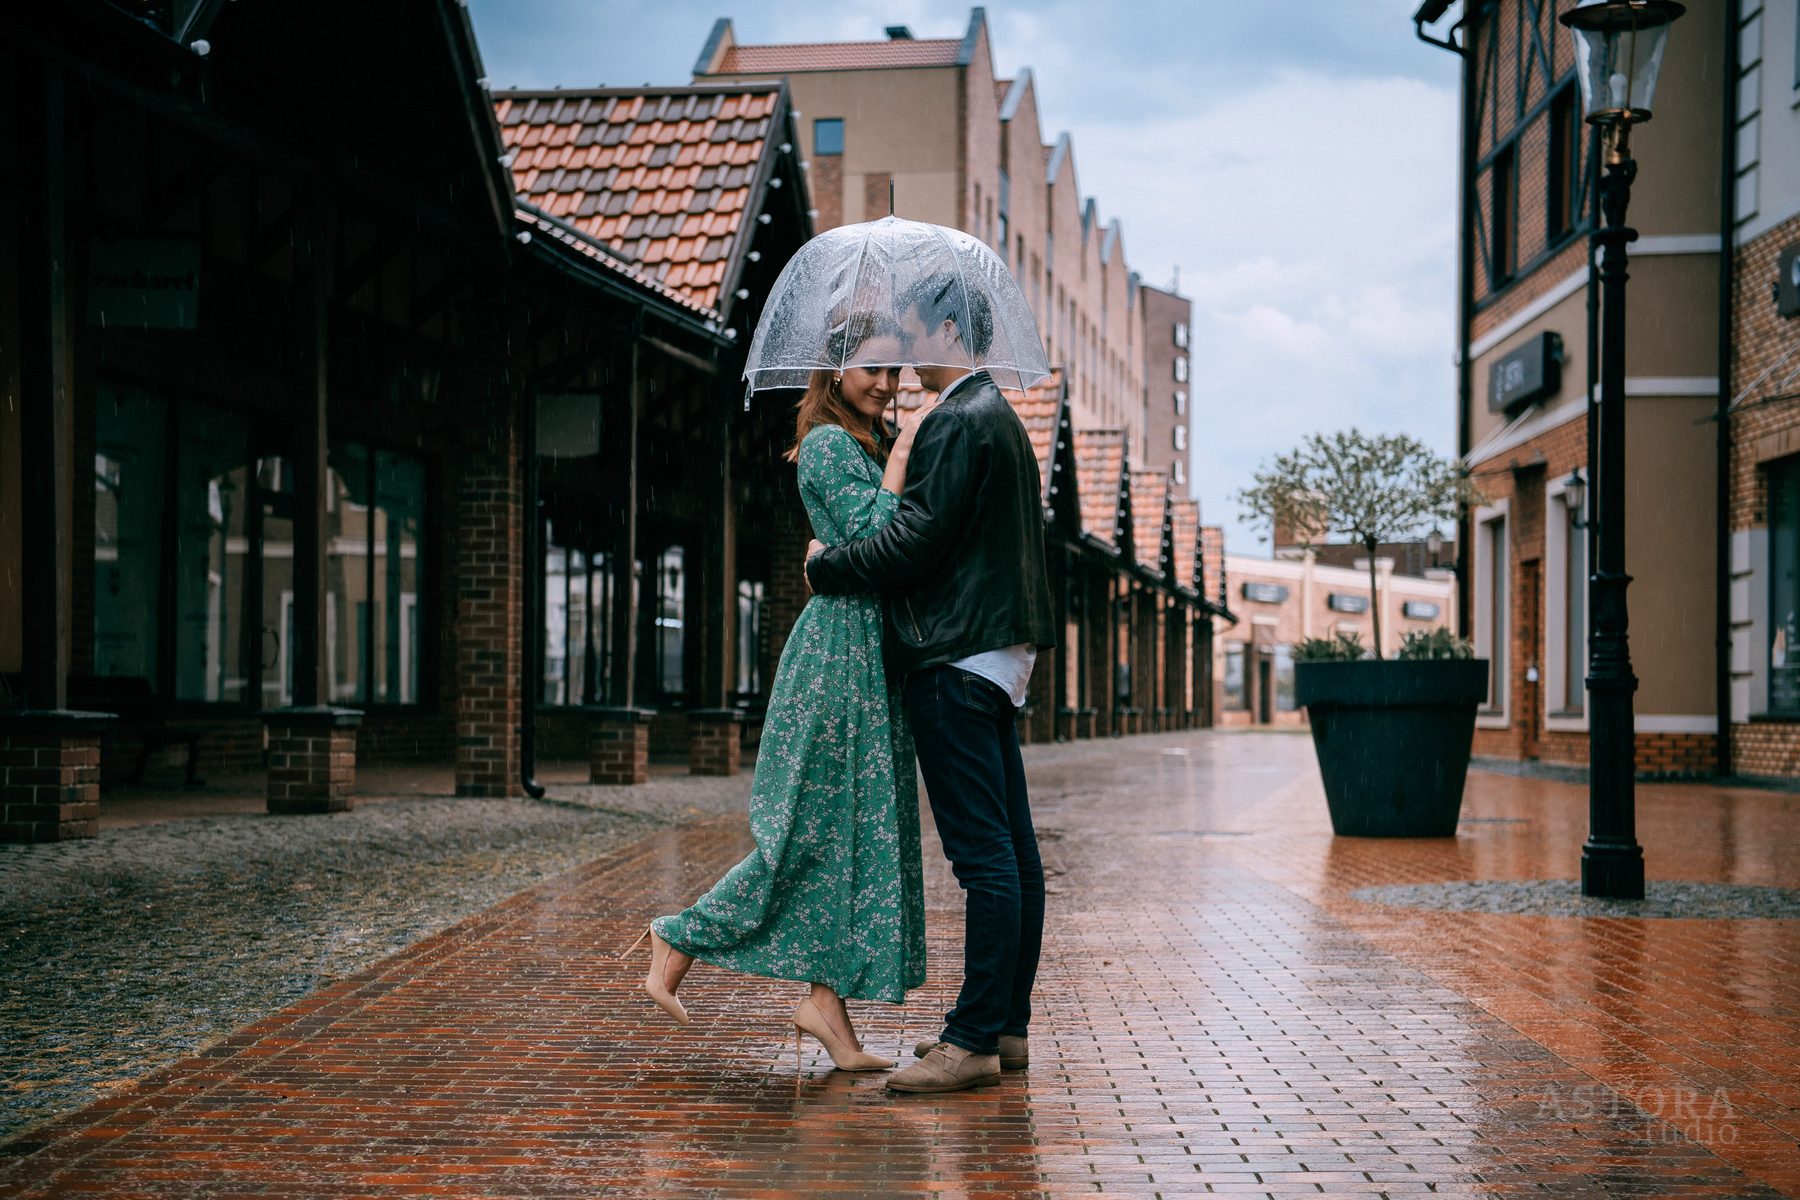 Astora Studio | rainy day pre wedding photos